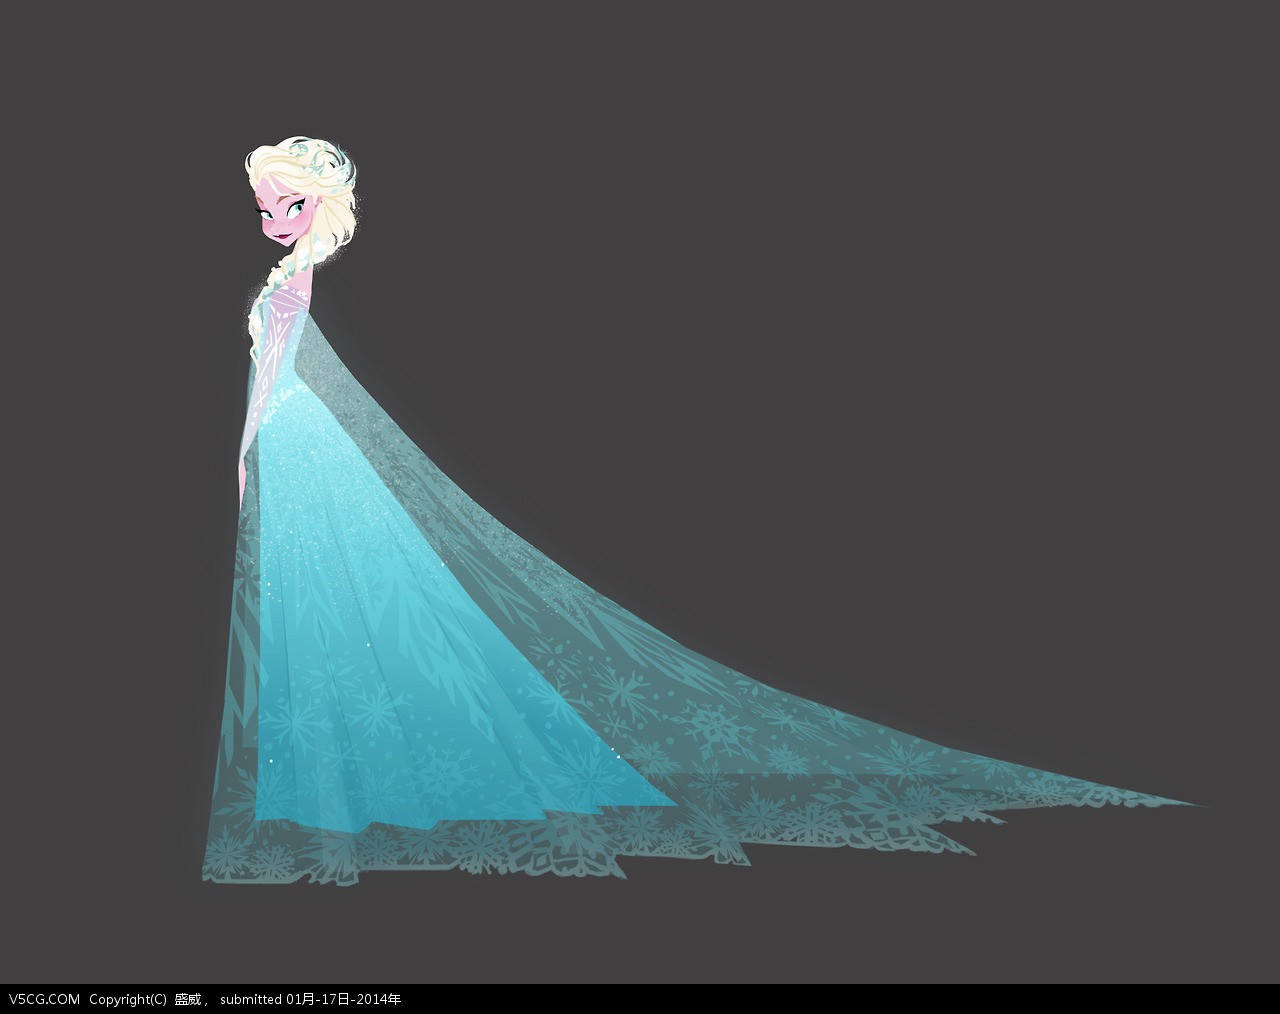 Disney_Frozen_Concept_Art_08.jpg